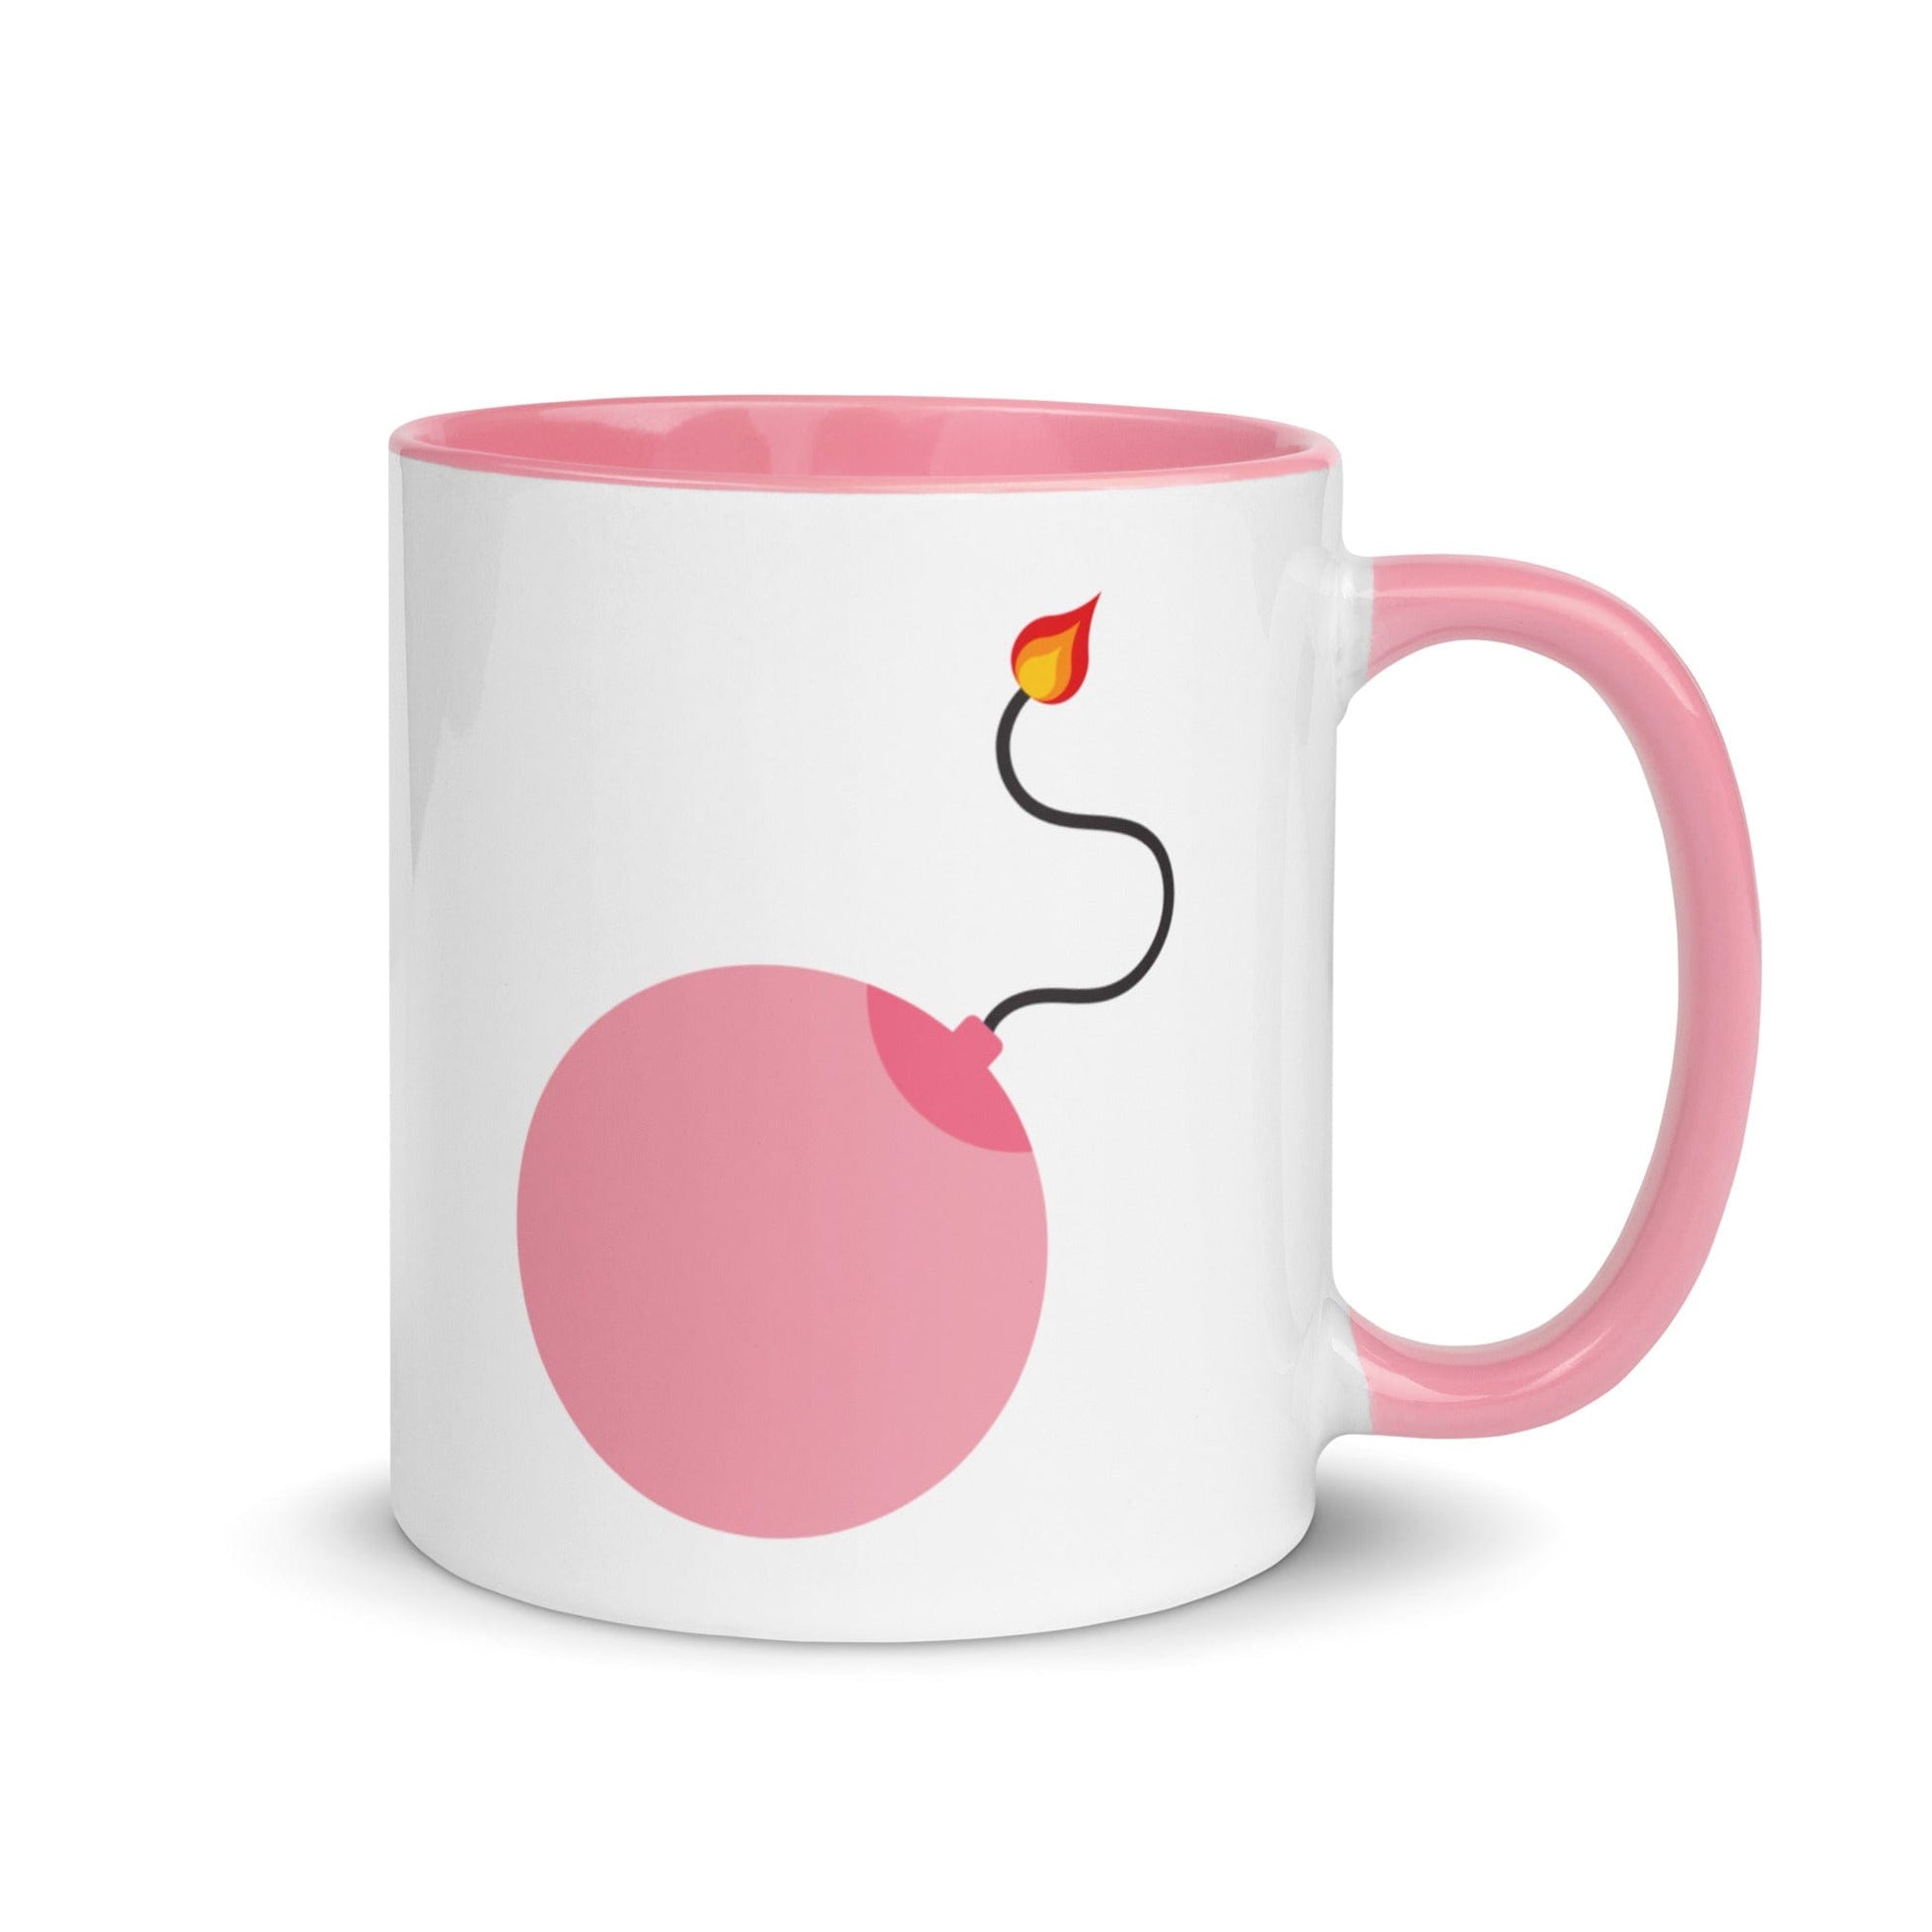 boomb-white-and-pink-feminist-ceramic-mug-by-feminist-define